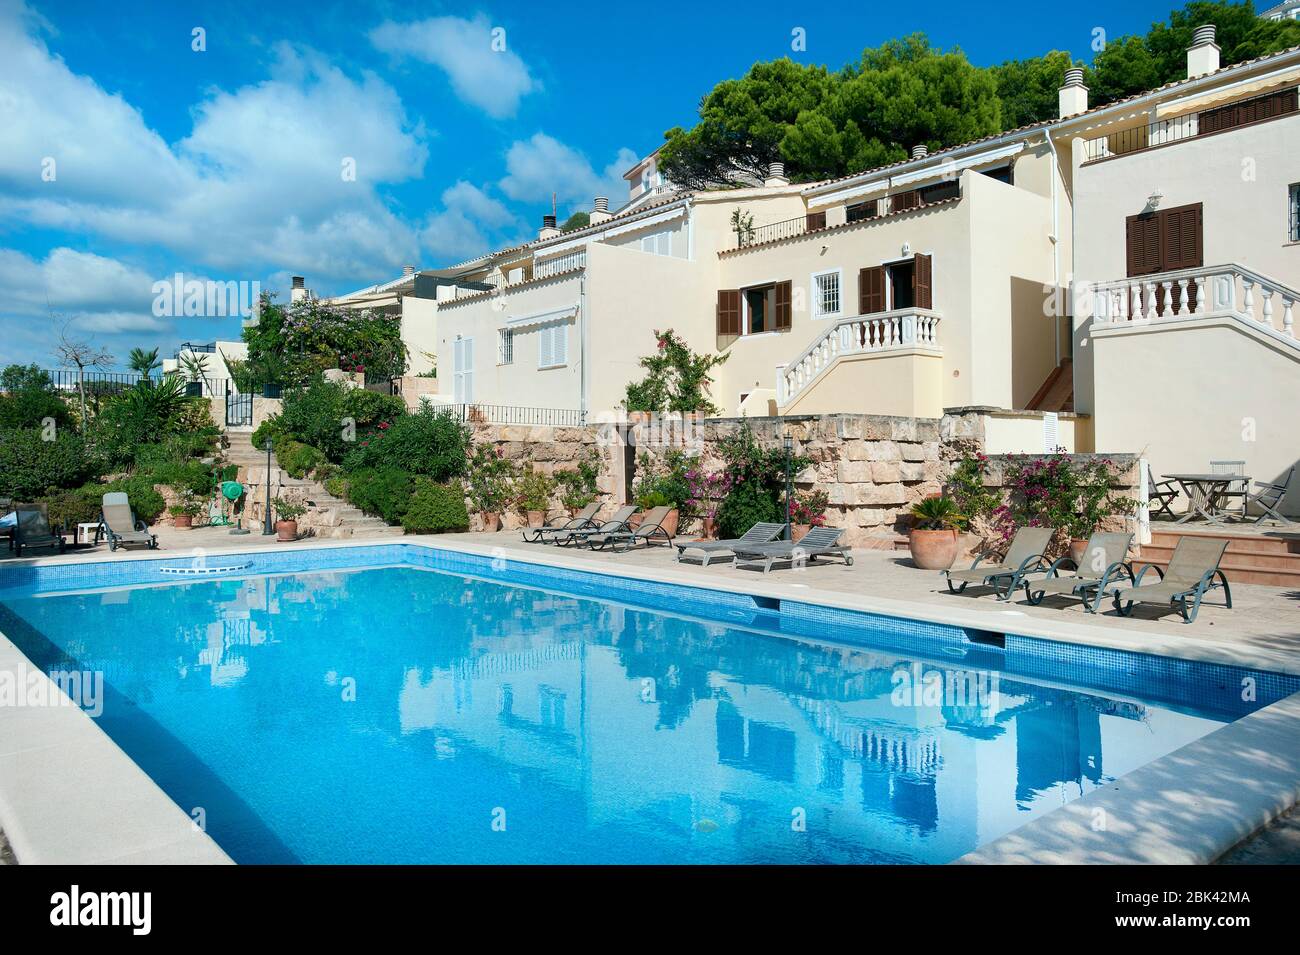 Pool area La Mola apartment complex, Andratx, Mallorca, Baleares, Spain Stock Photo